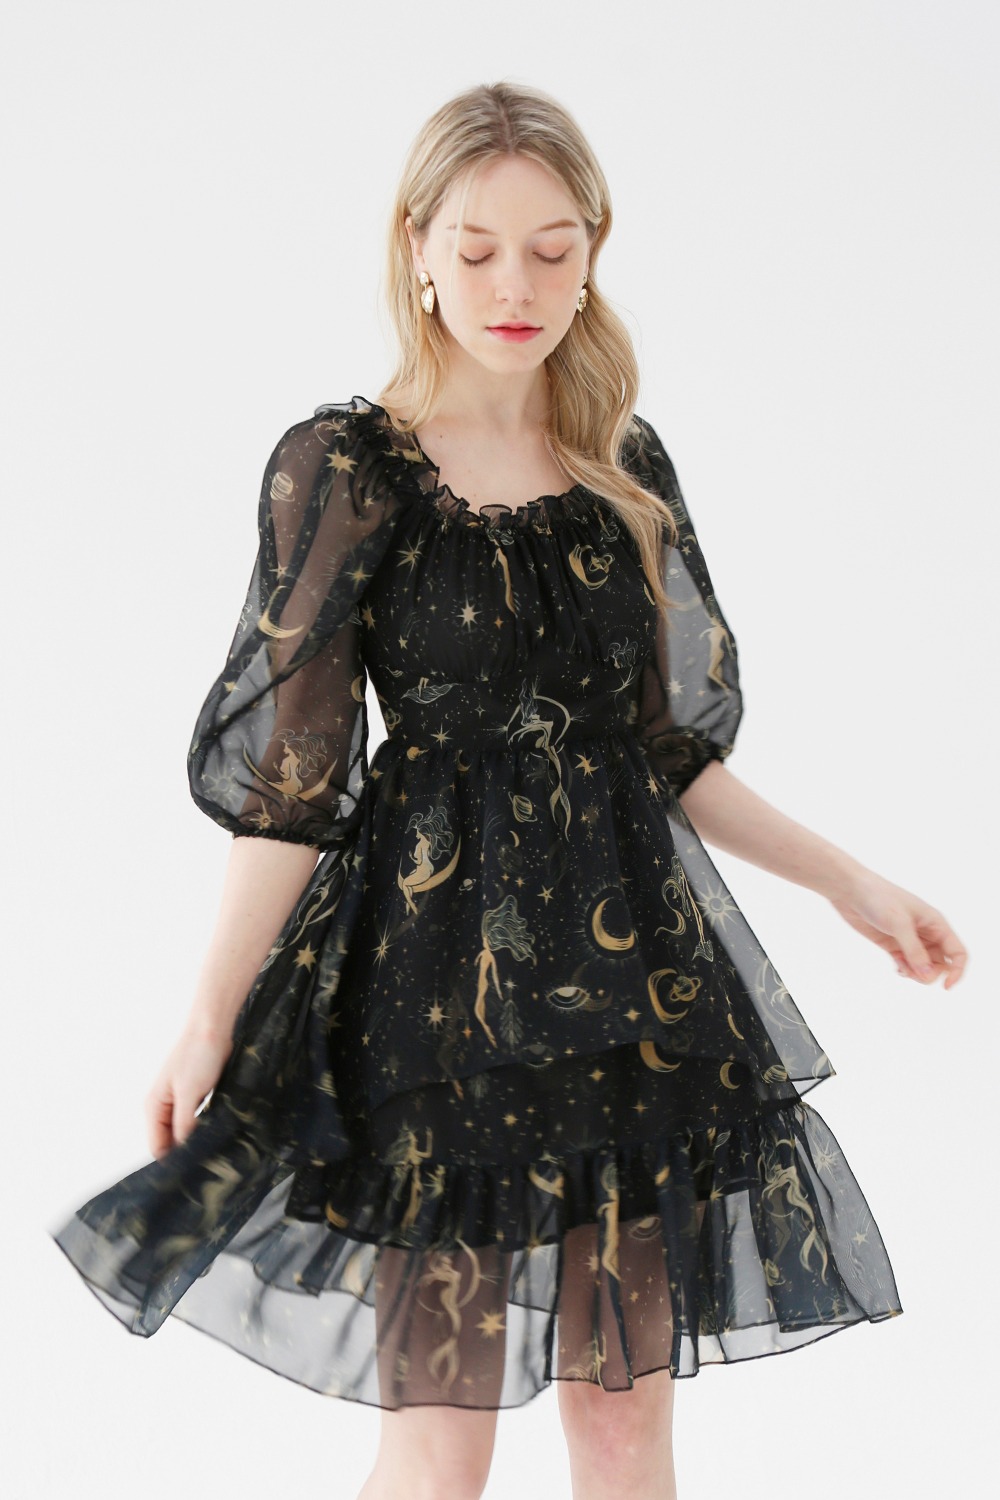 Fairy dream shirring dress (Black)